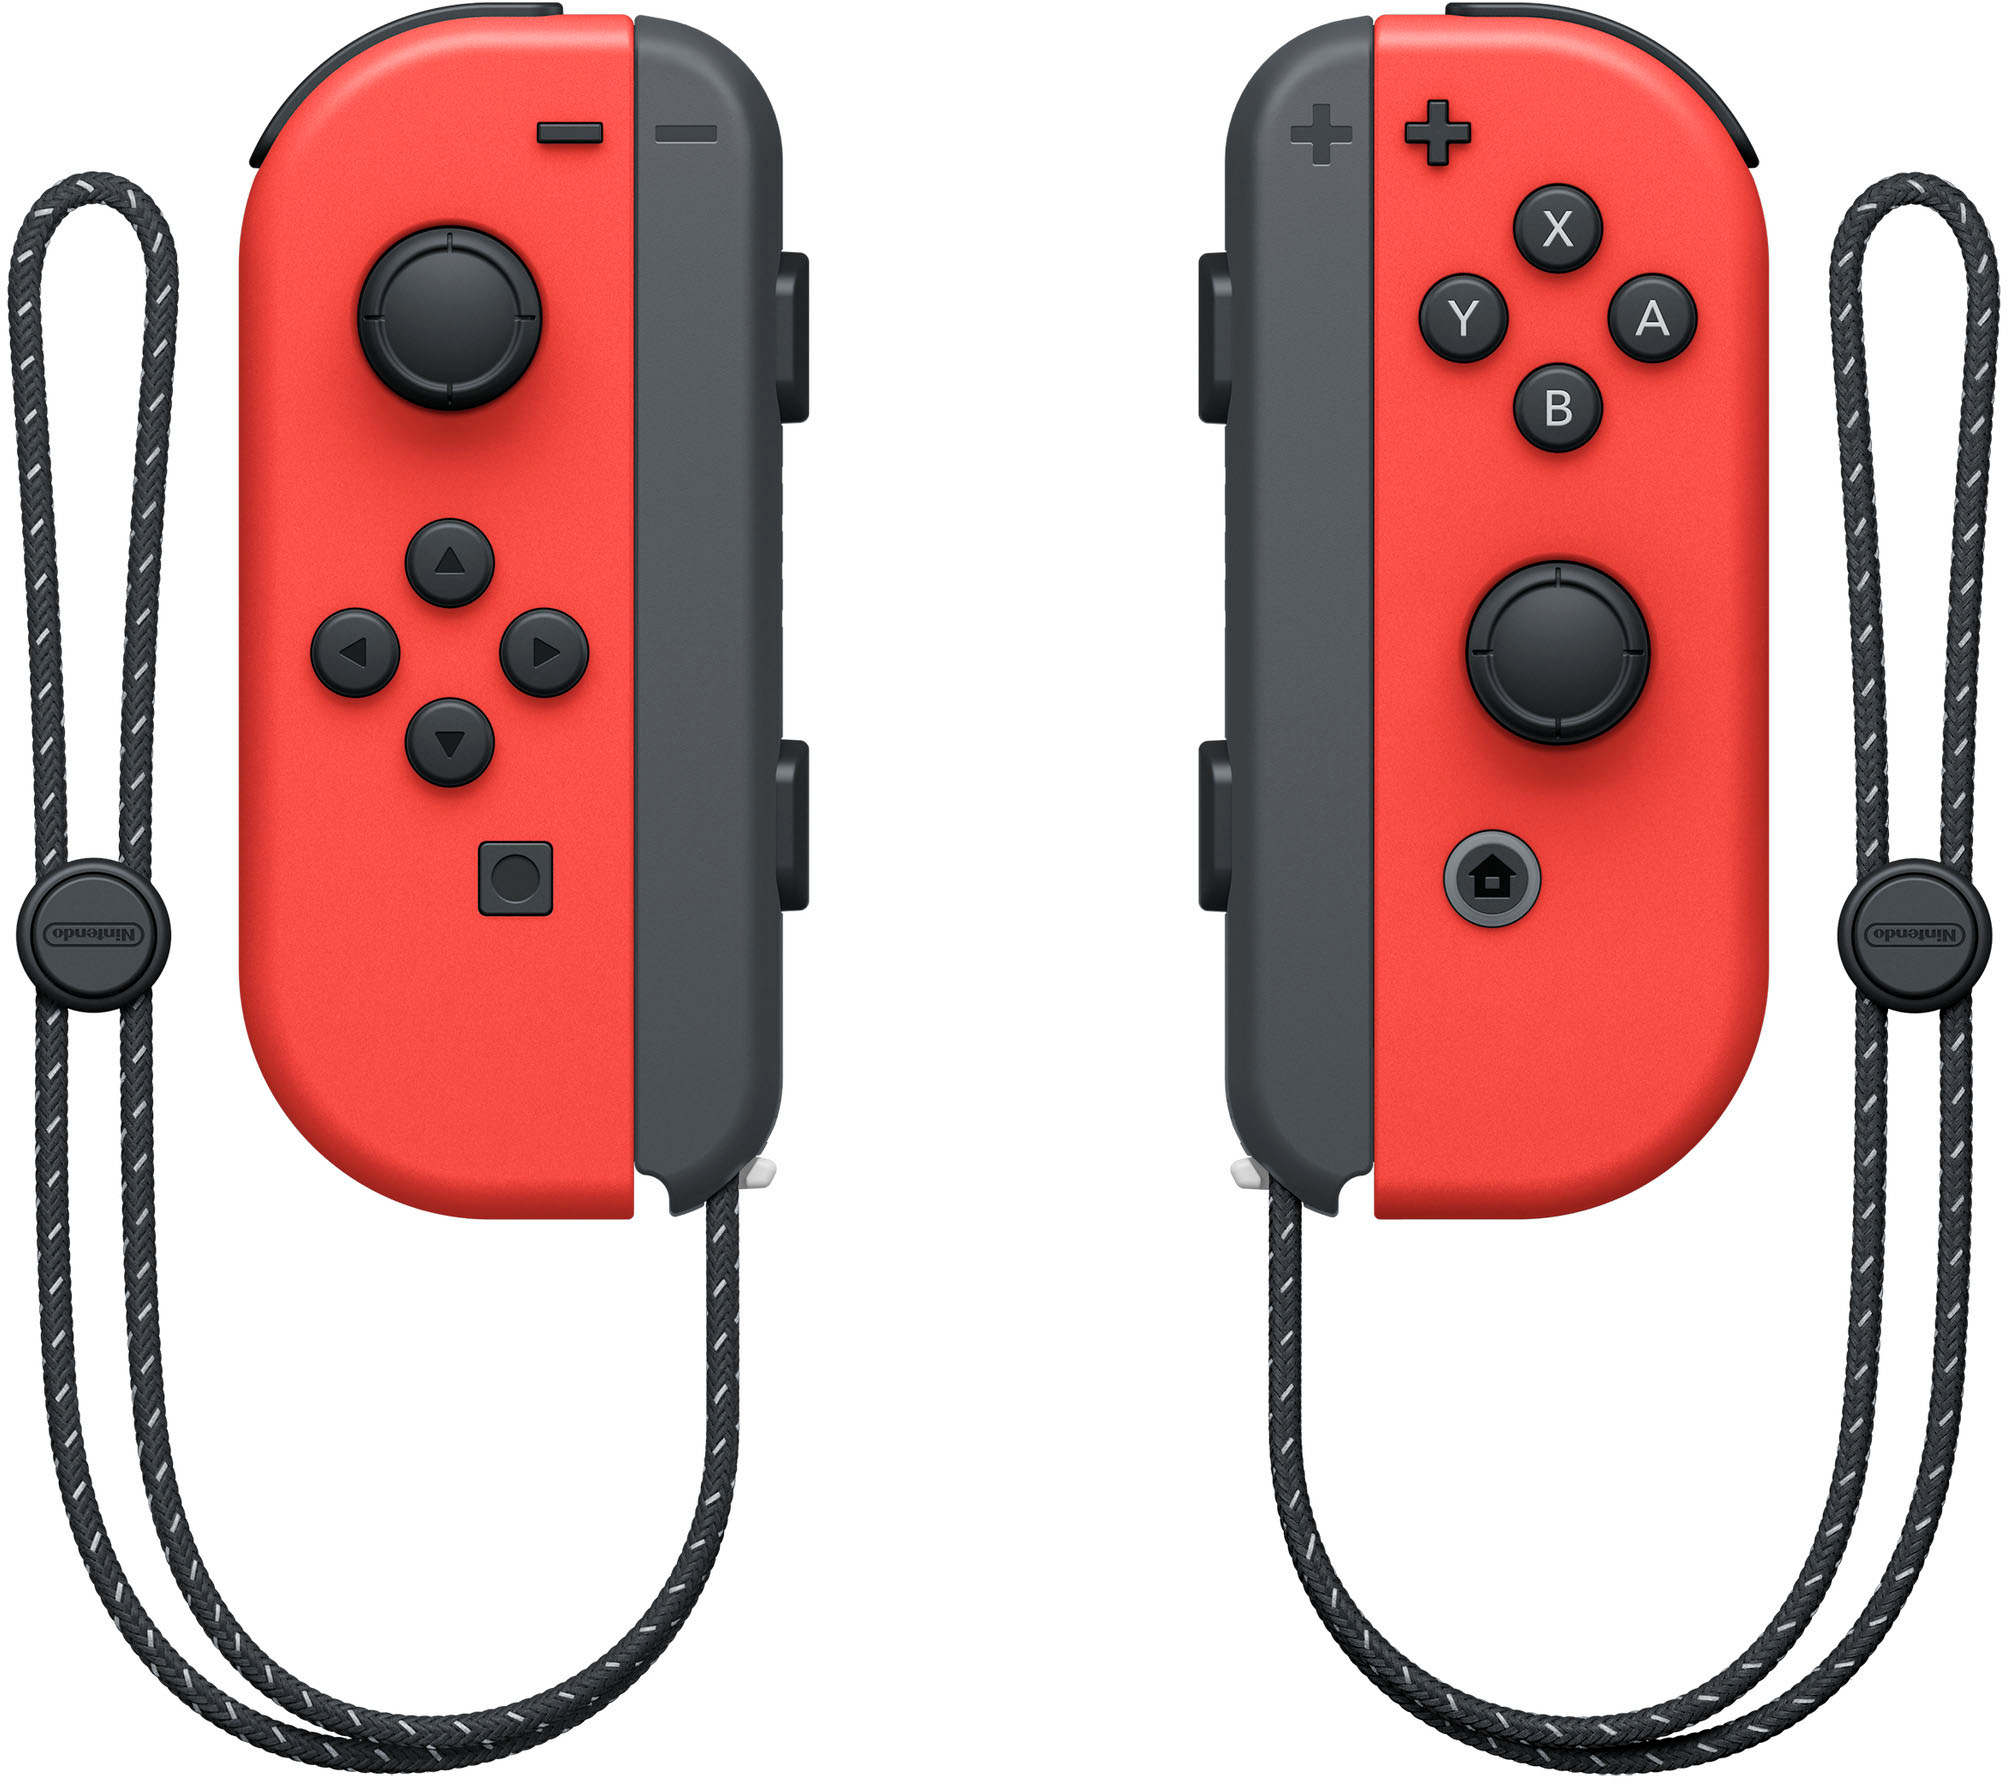 Super Mario Party + Red & Blue Joy-Con Bundle $39.98 Savings Nintendo  Switch – OLED Model, Nintendo Switch [Digital] - Best Buy